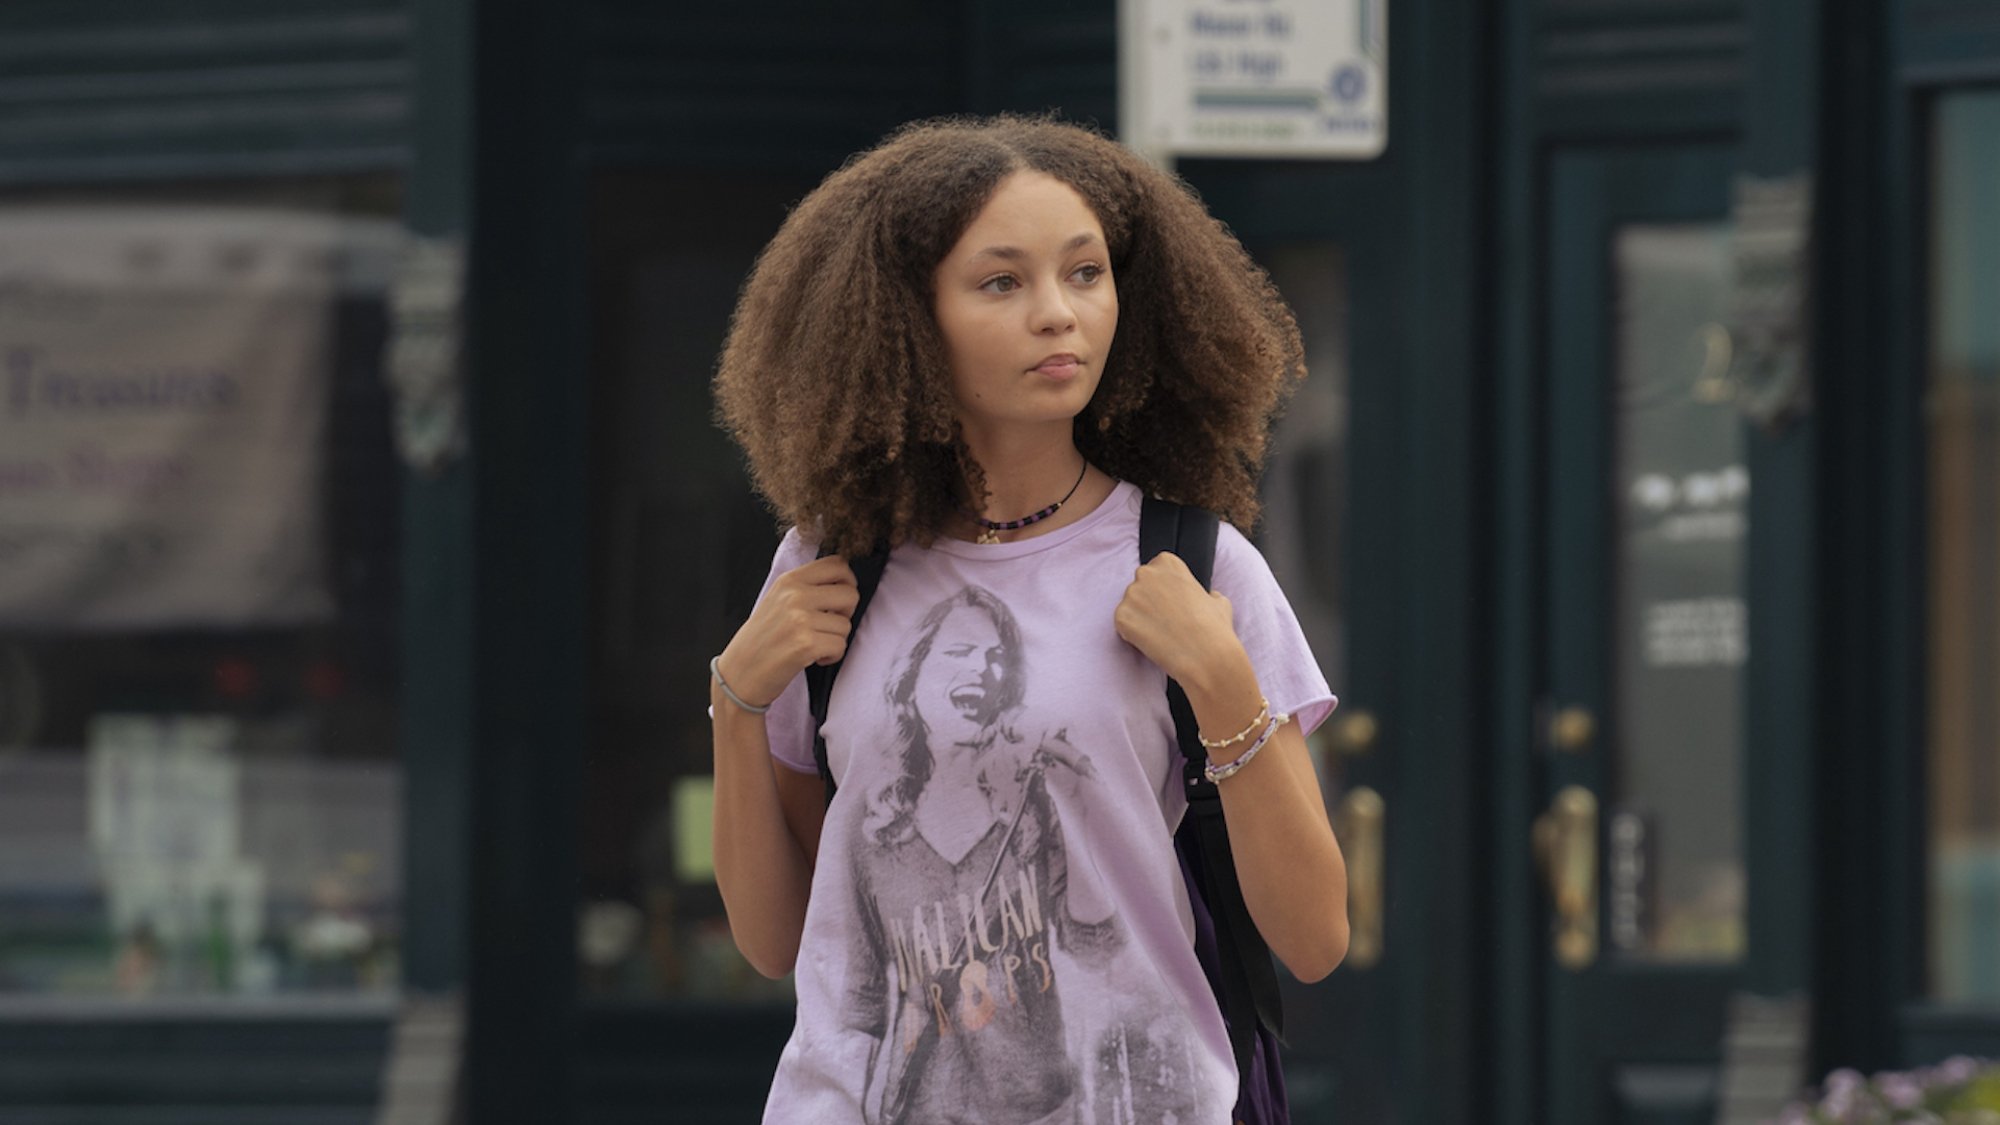 A teen wearing a backpack walks through a small town.